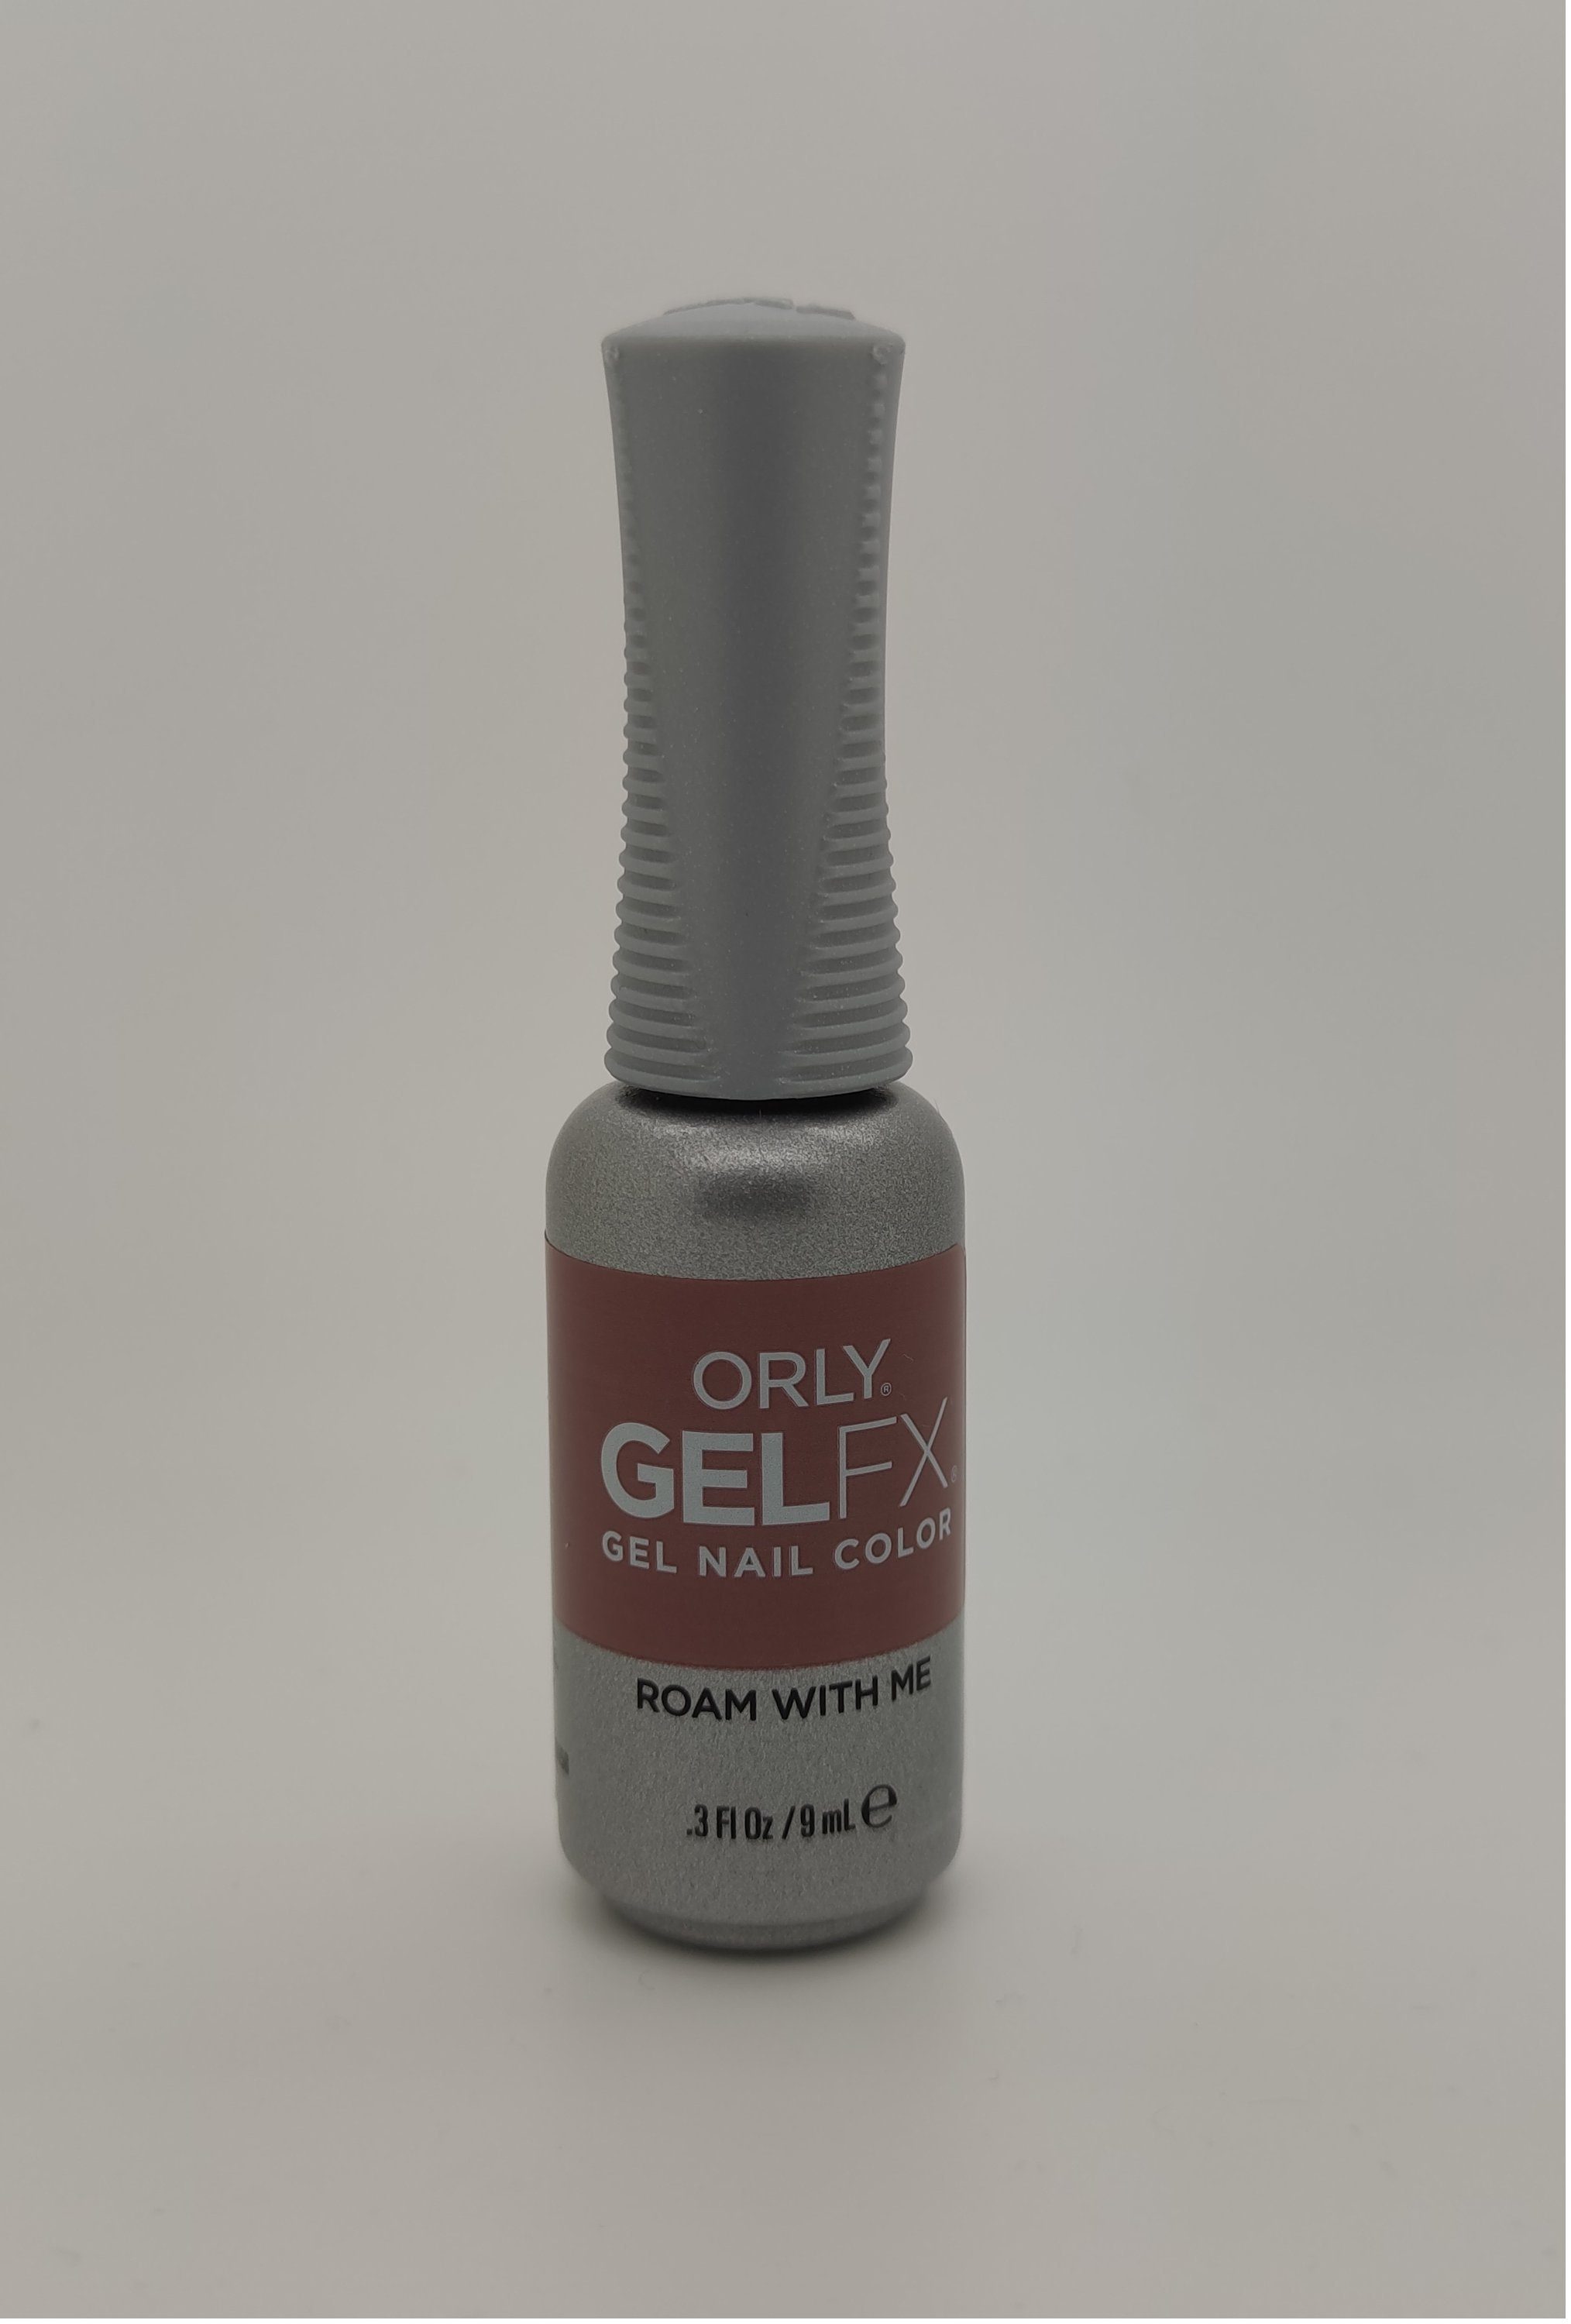 ORLY UV-Nagellack GEL FX Roam With Me, 9ML | Nagellacke